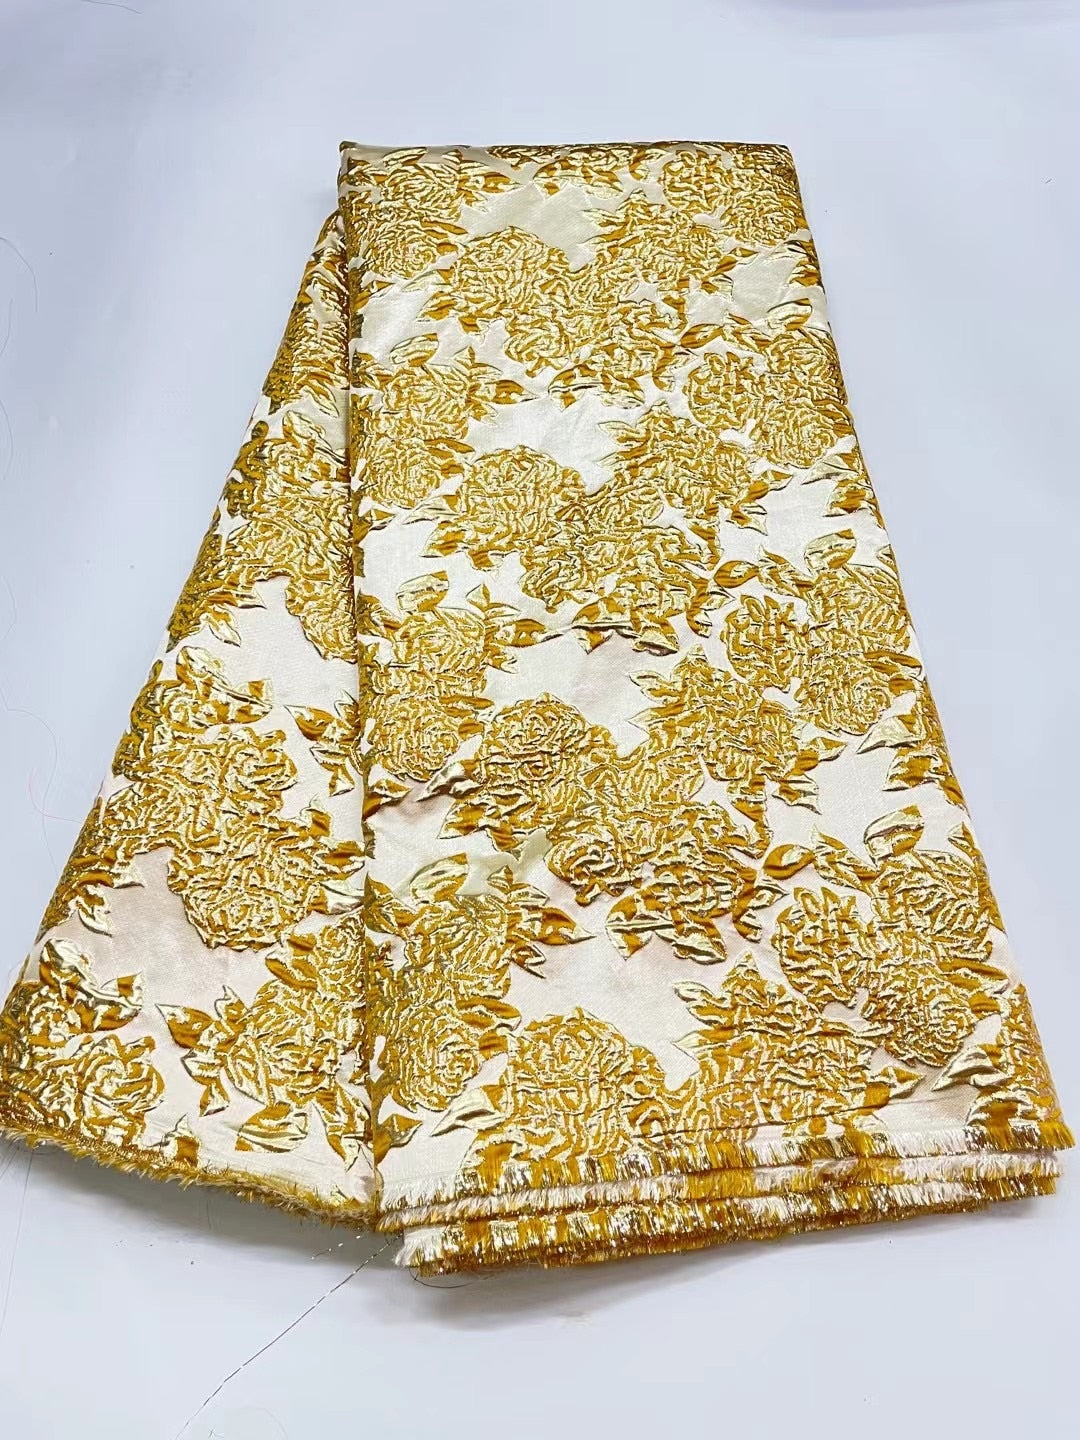 5 YARDS / 10 COLORS / Golden Floral Viscose Jacquard Brocade Woven Fashion Jacket Dress Fabric